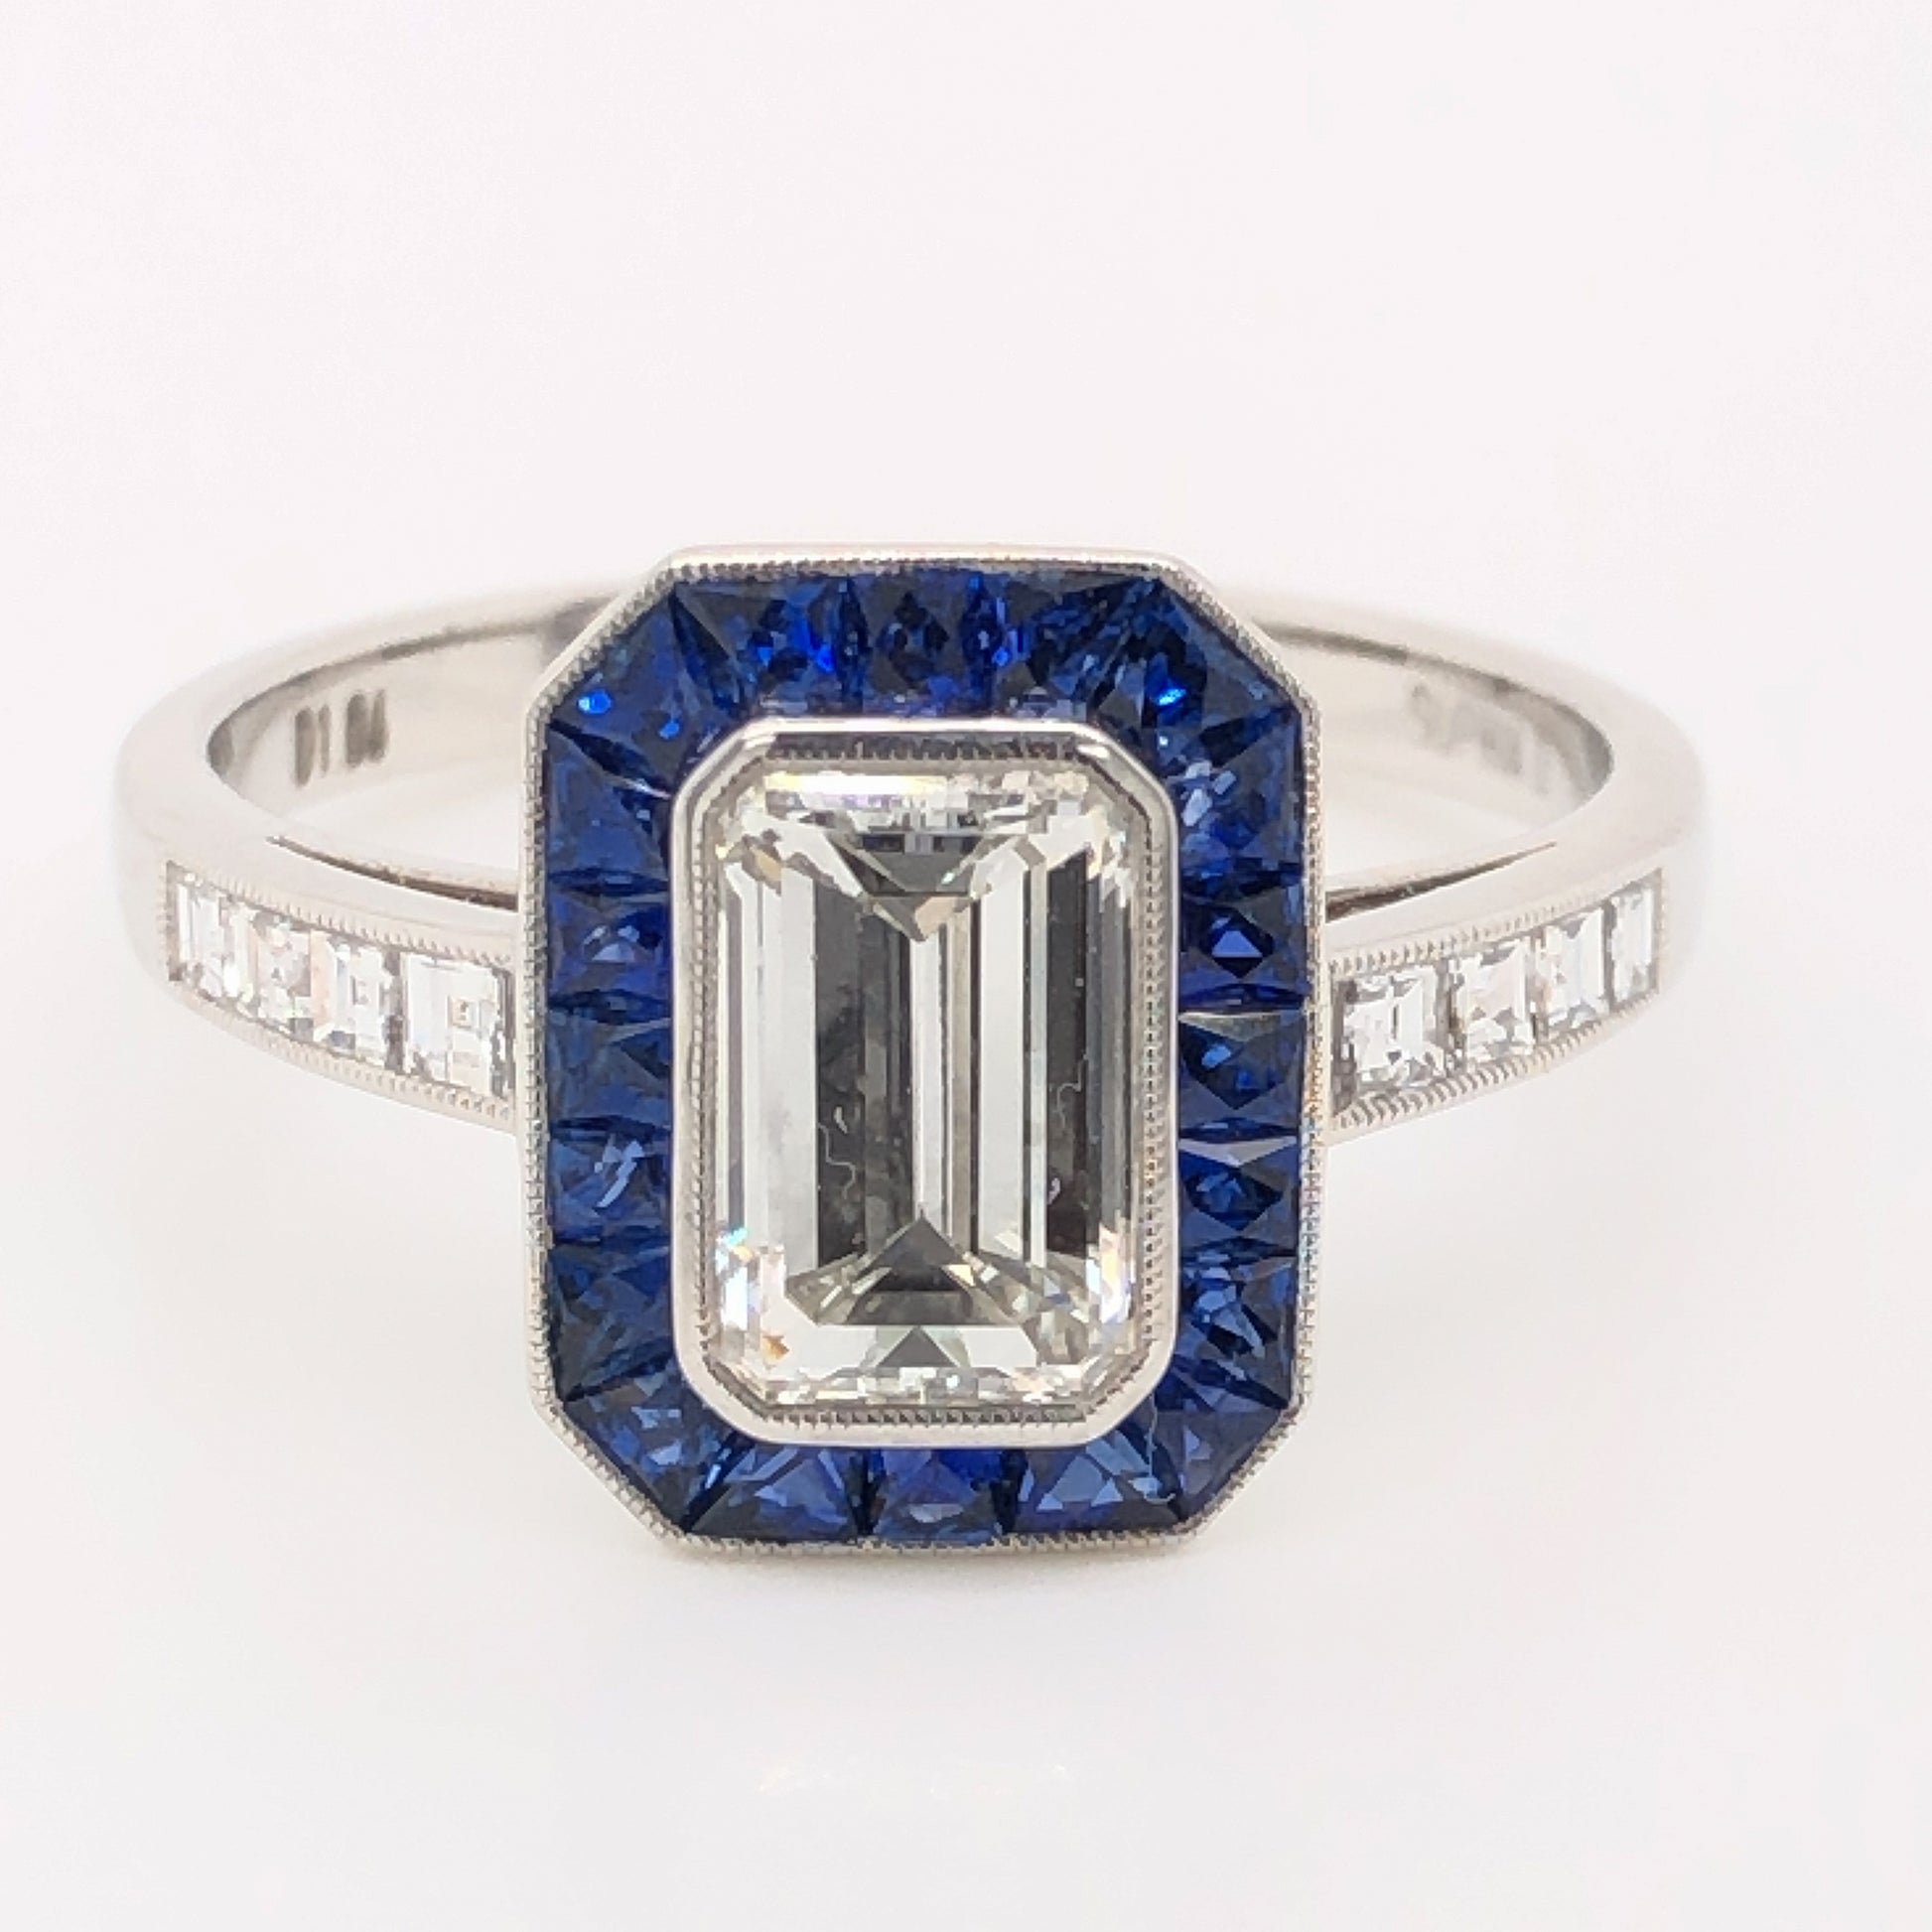 1.06 Emerald Cut Diamond & Sapphire Ring in Platinum